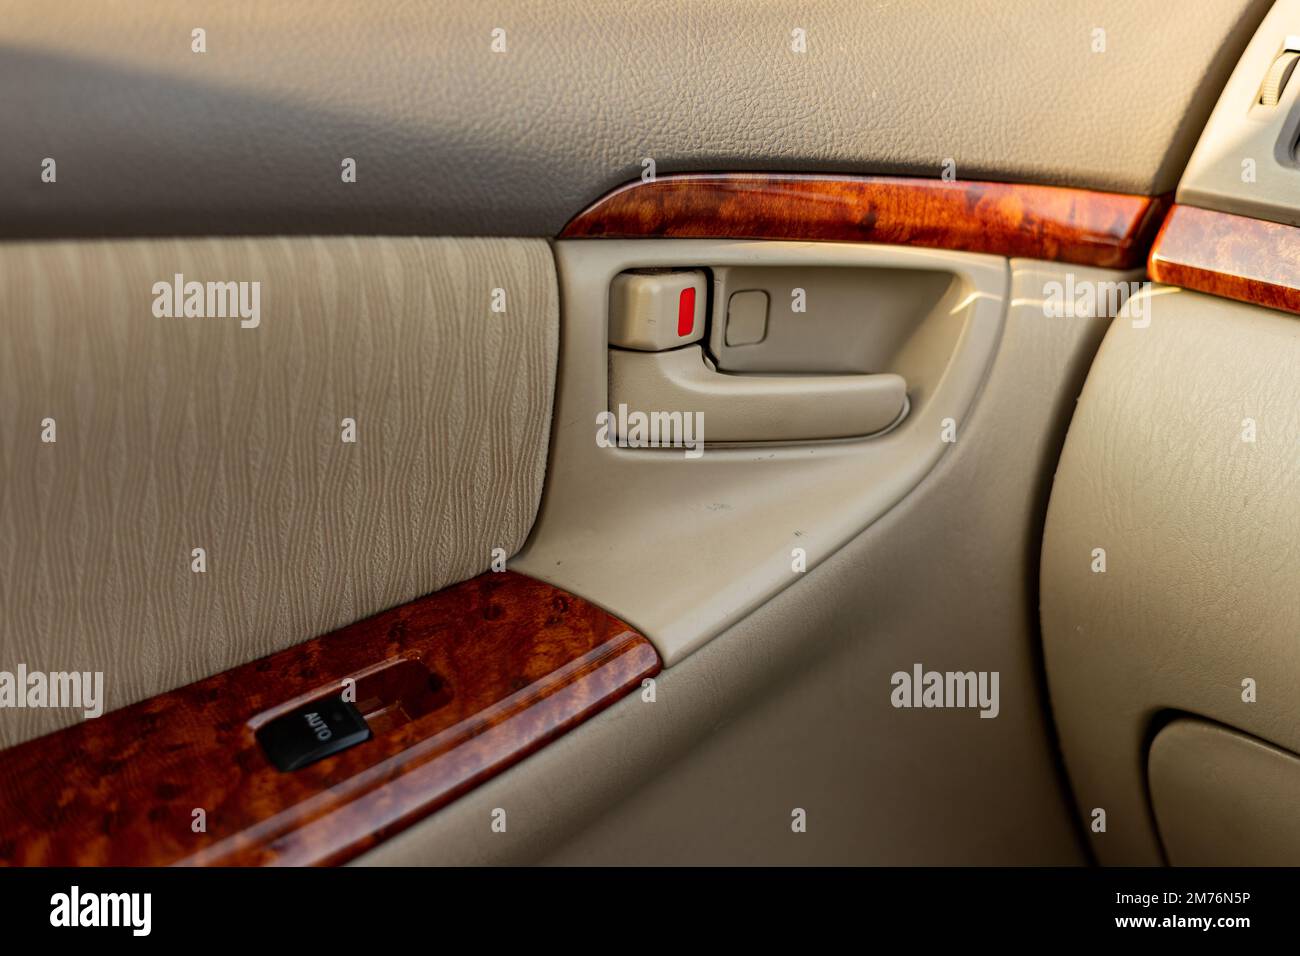 656 Car Door Handle Scratch lizenzfreie Fotos und Stockbilder